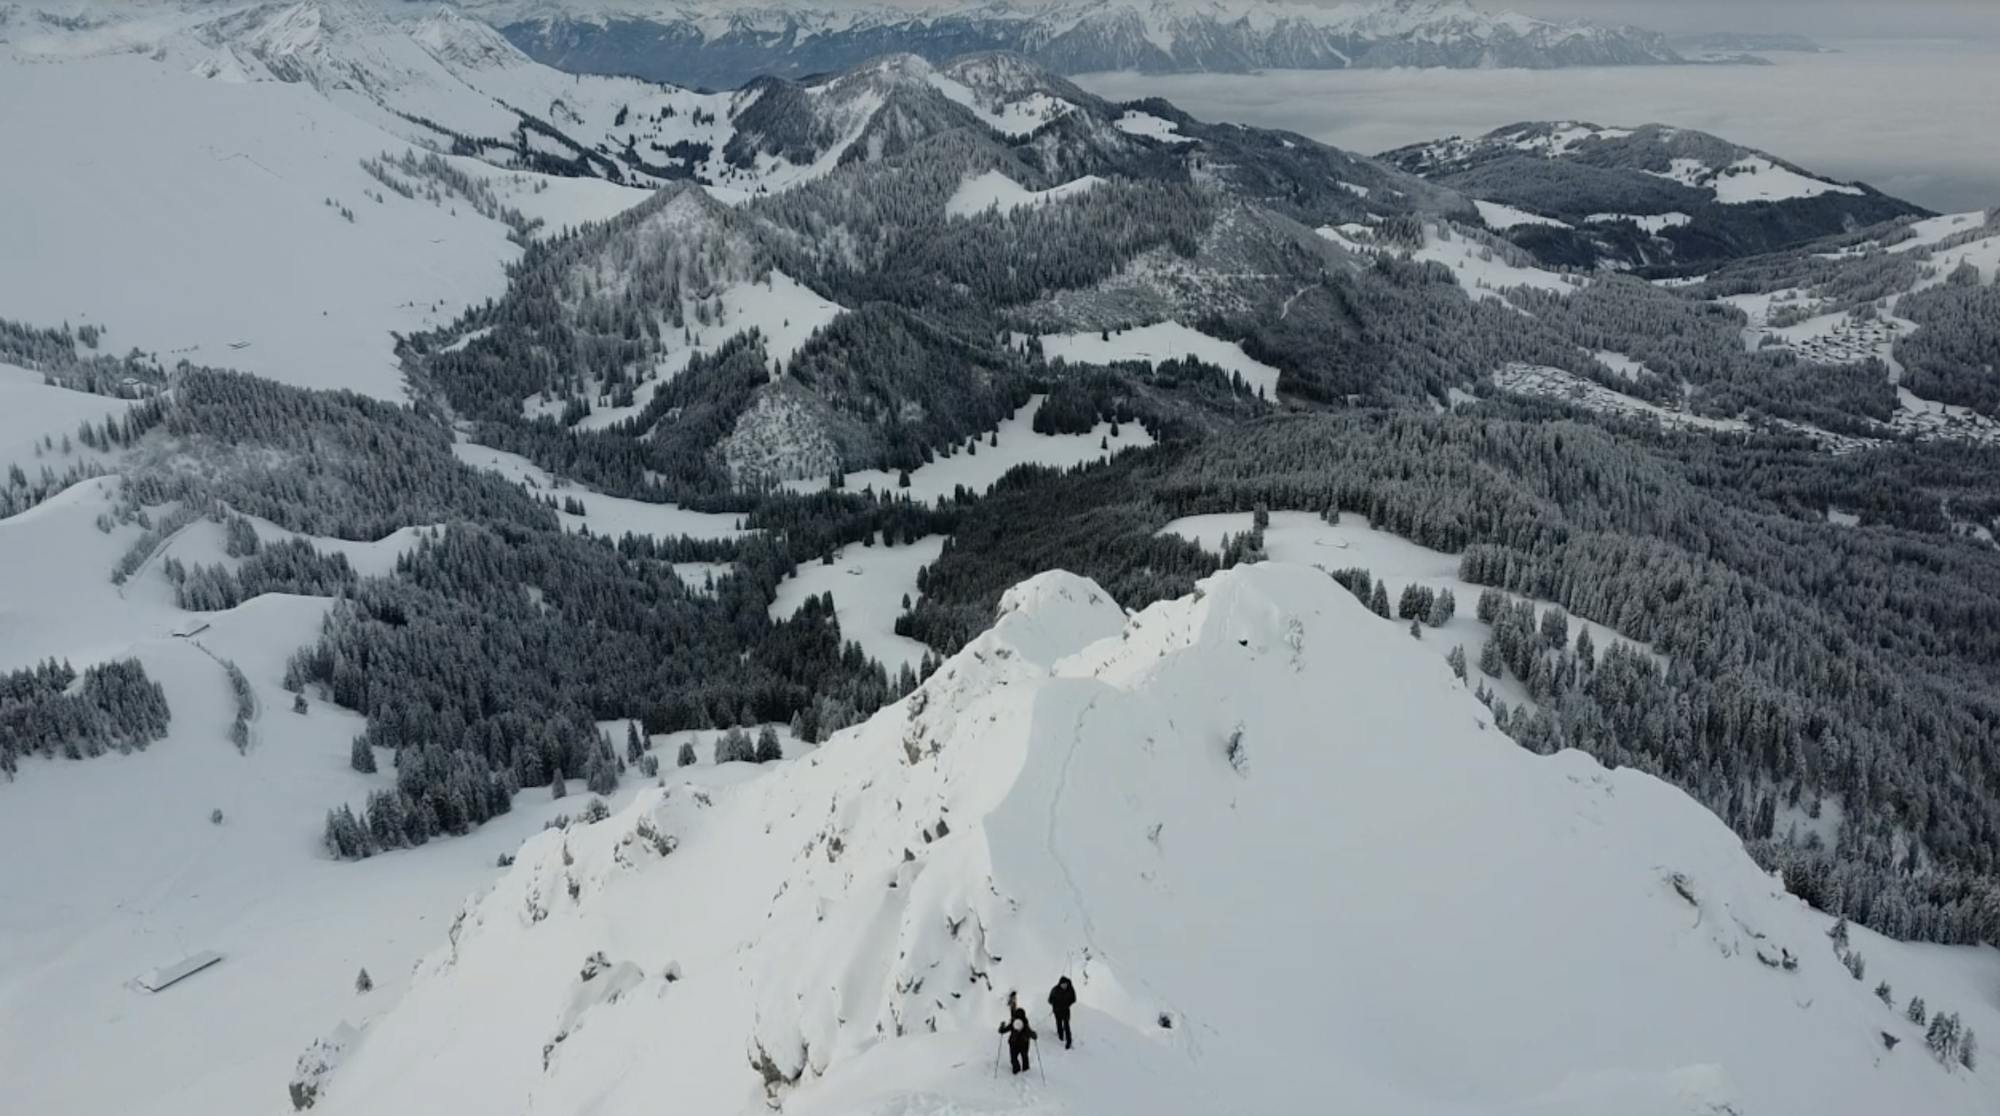 Final ridge to the summit